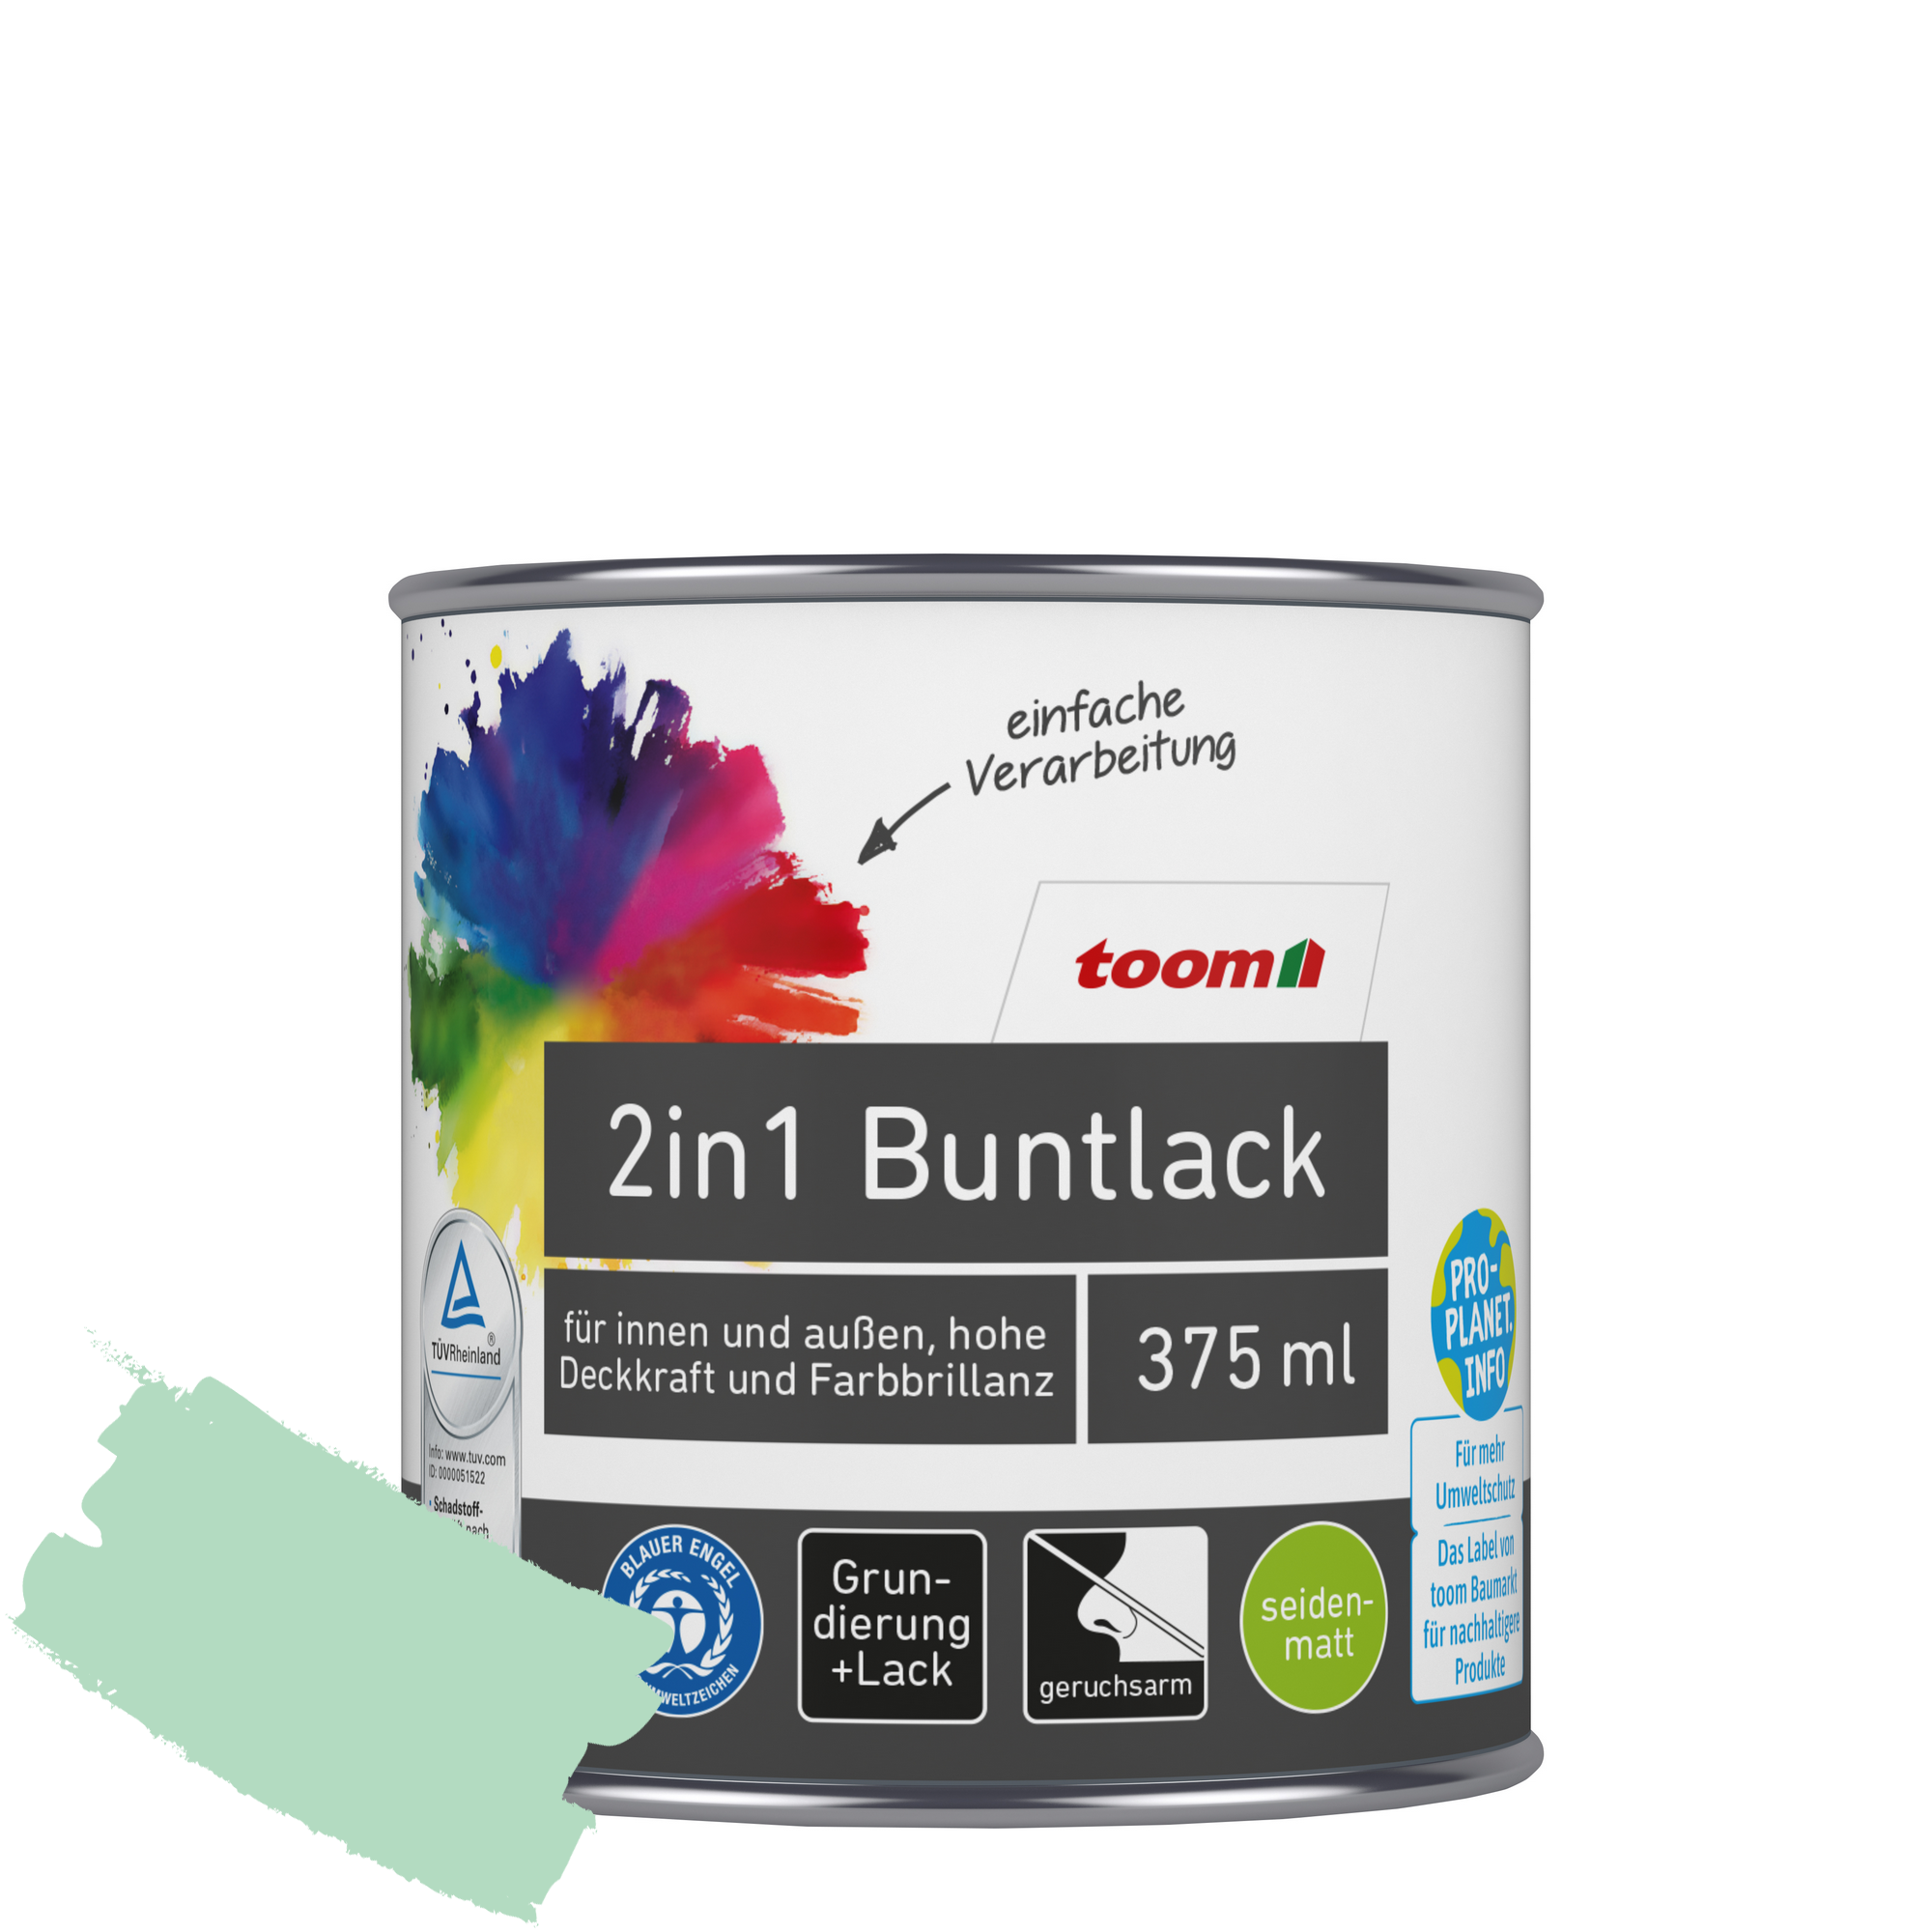 2in1 Buntlack minzgrün seidenmatt 375 ml + product picture